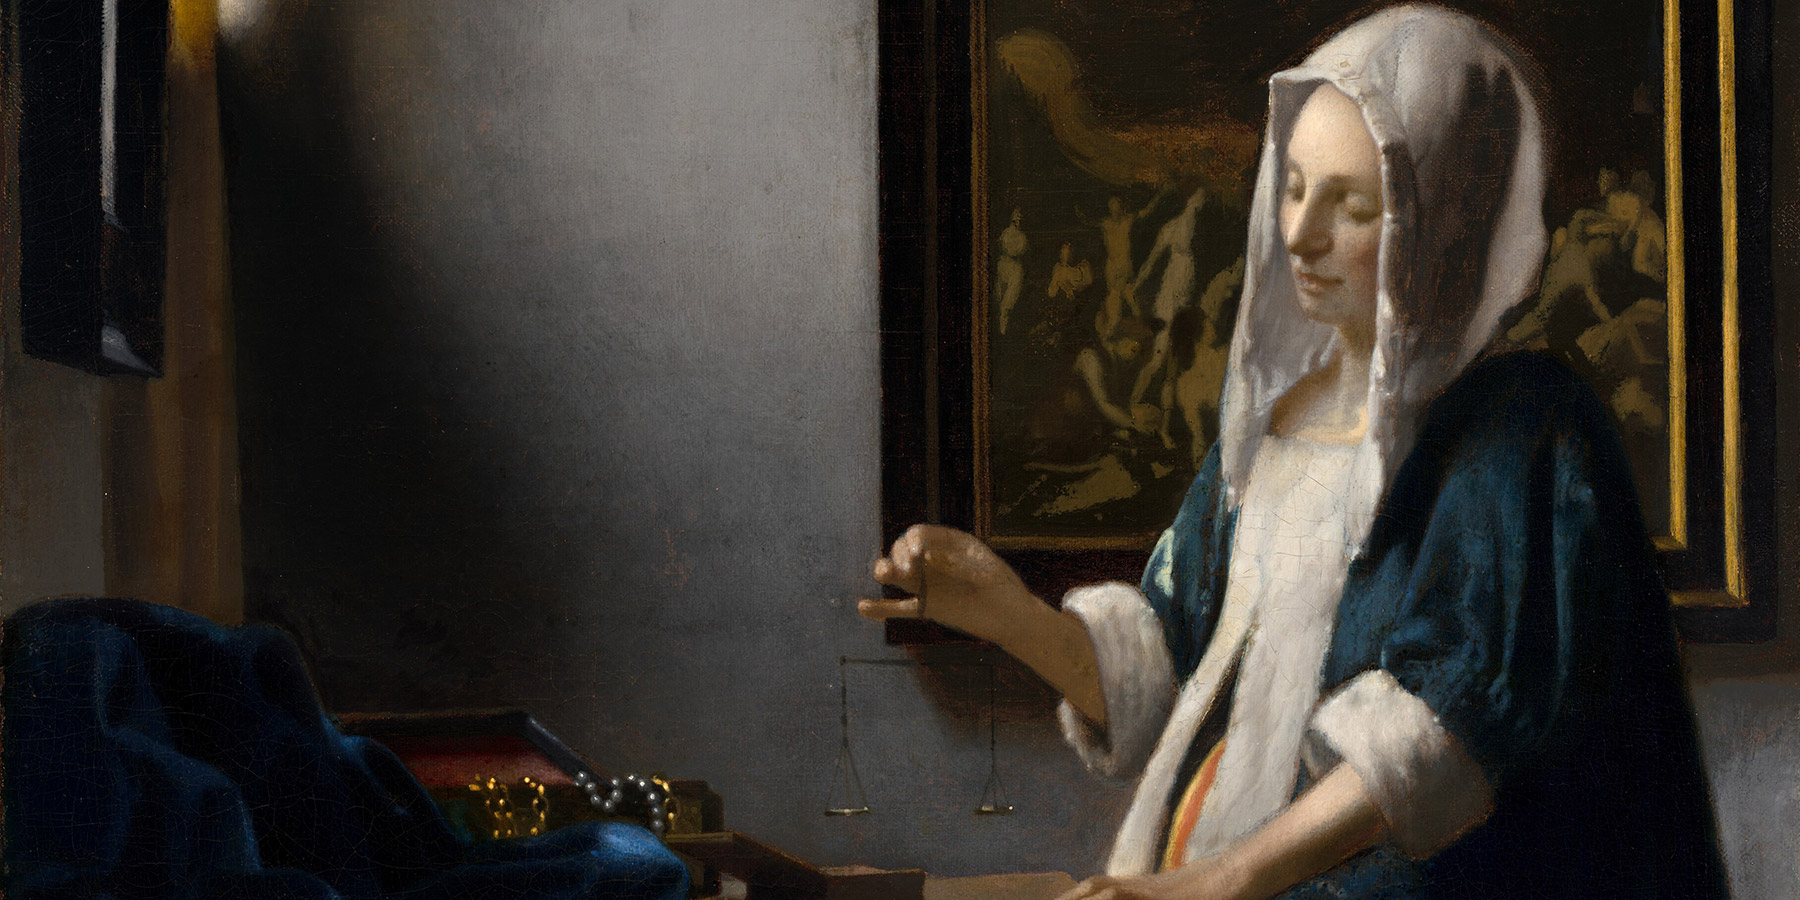 Genshin impact краски вермеера. Йоханнес Вермеер (1632-1675). Вермеер женщина взвешивающая жемчуг.